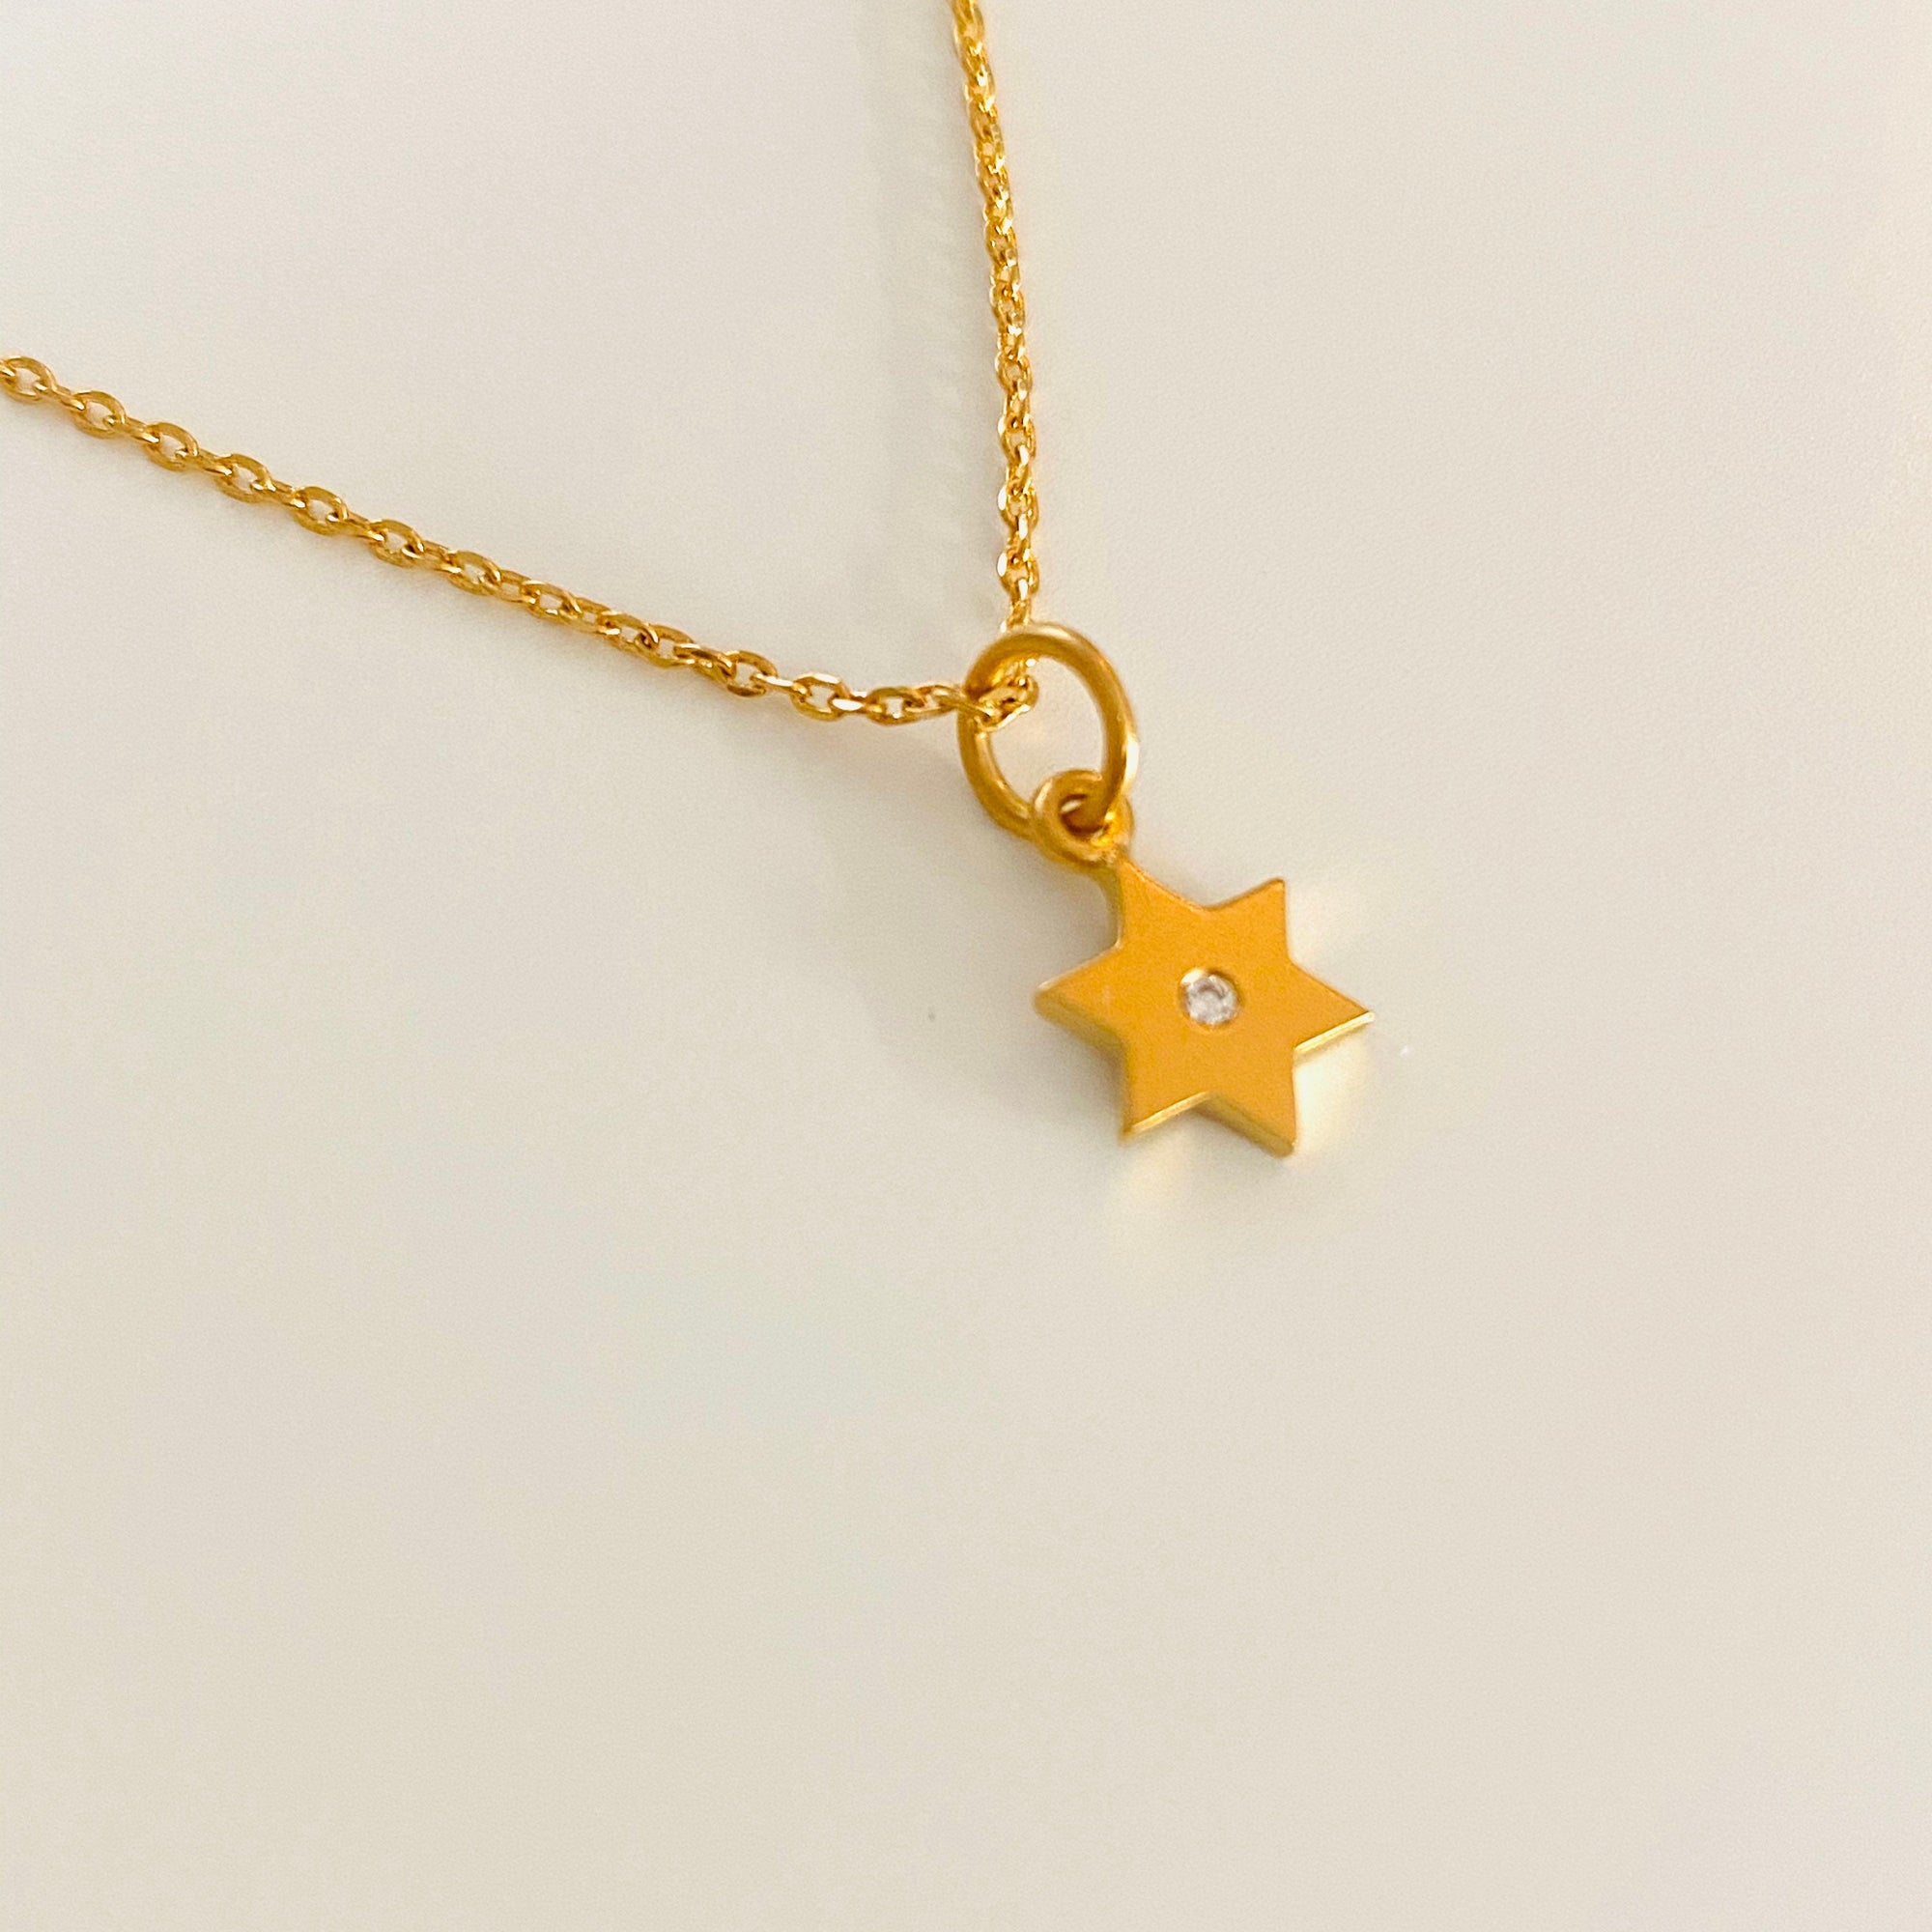 David star necklace